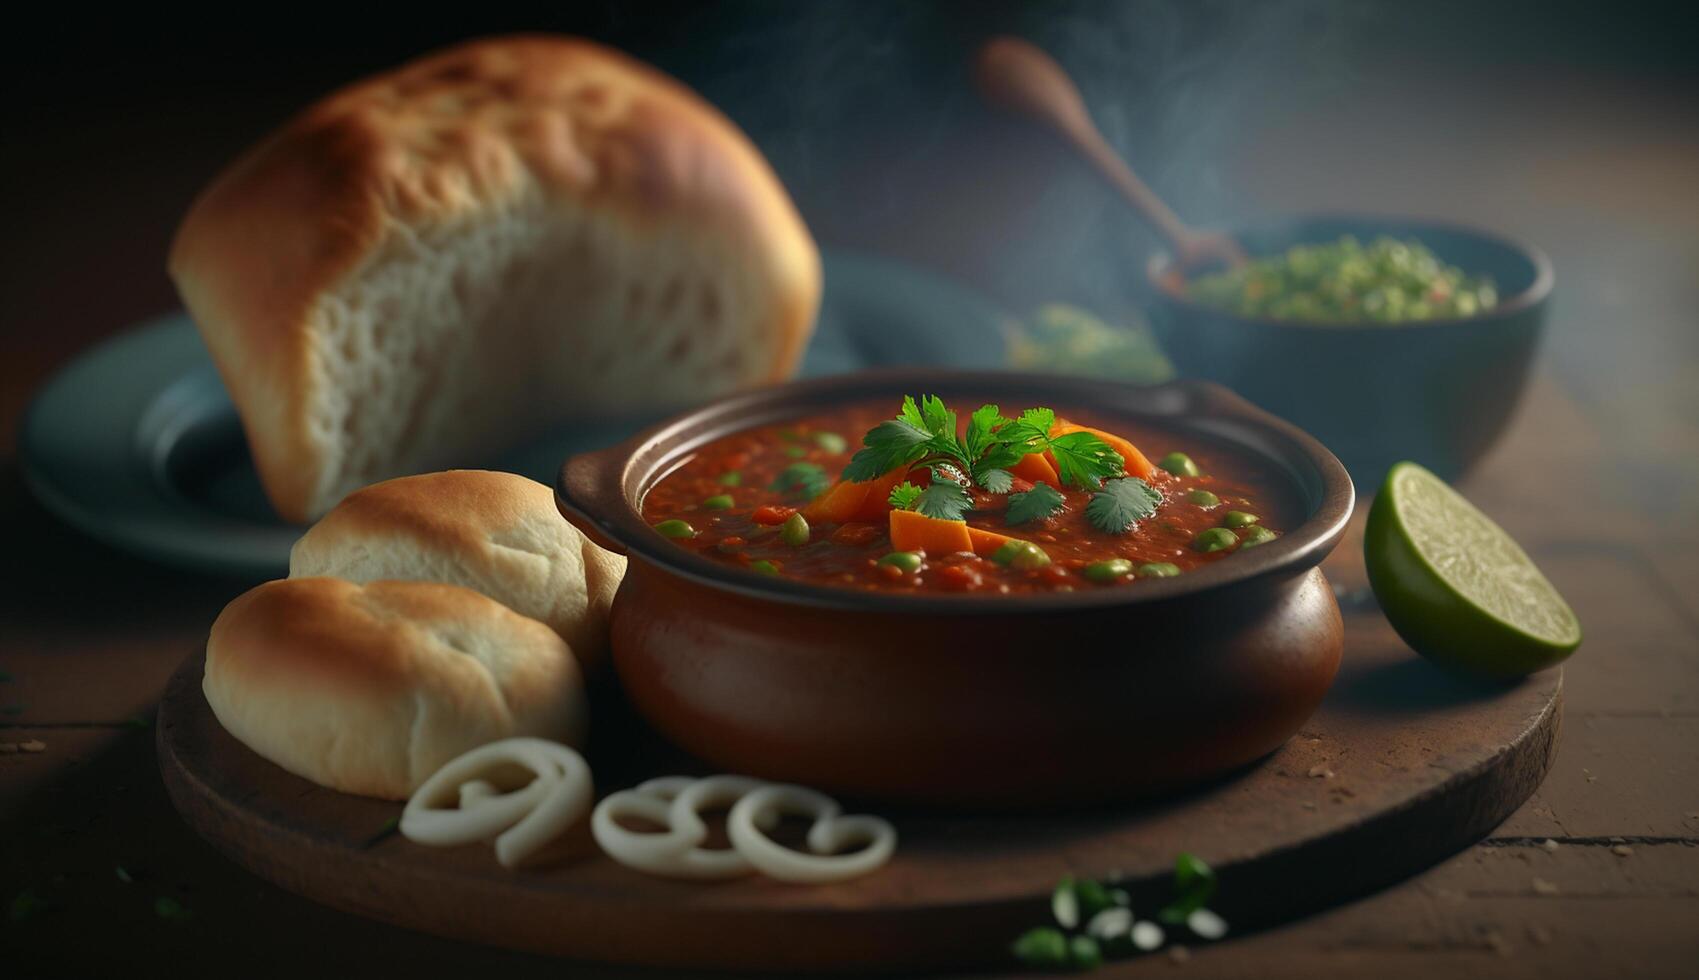 Steaming Pav Bahji, Indian Dish, on a Dark Background photo